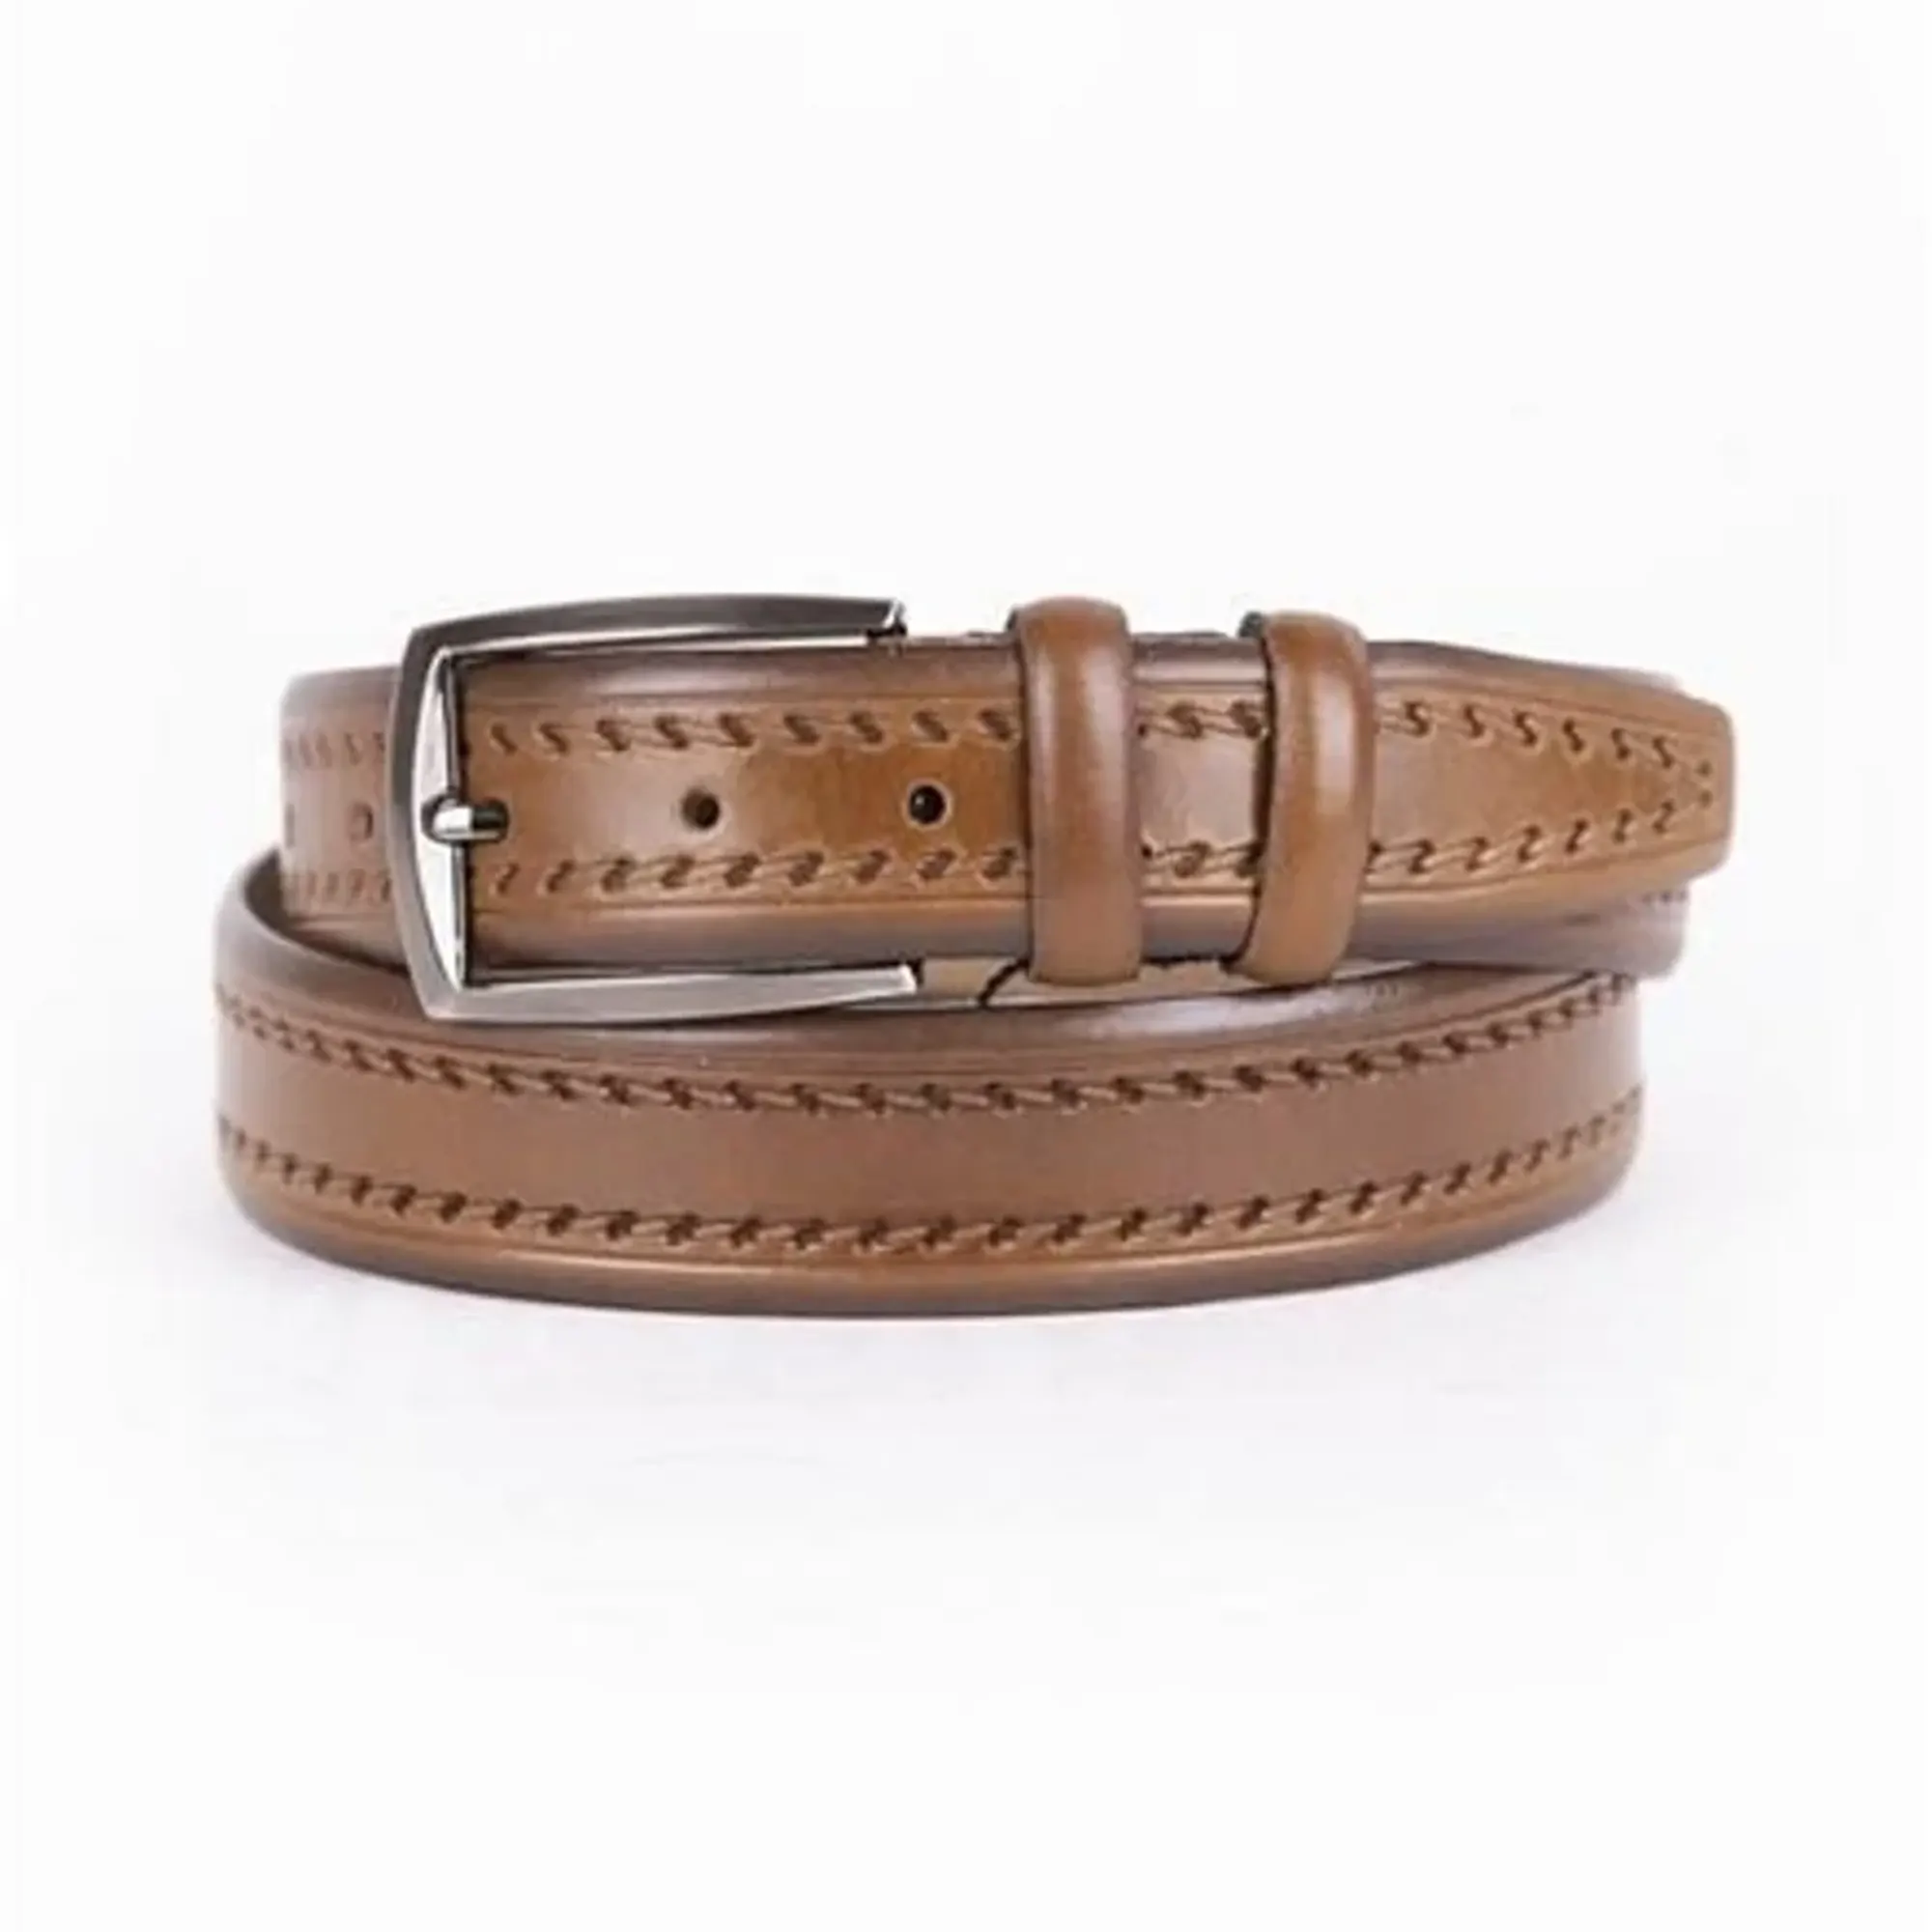 Light Brown Belt Fashion: Outfit Ideas for Men - LeatherBeltsOnline.com